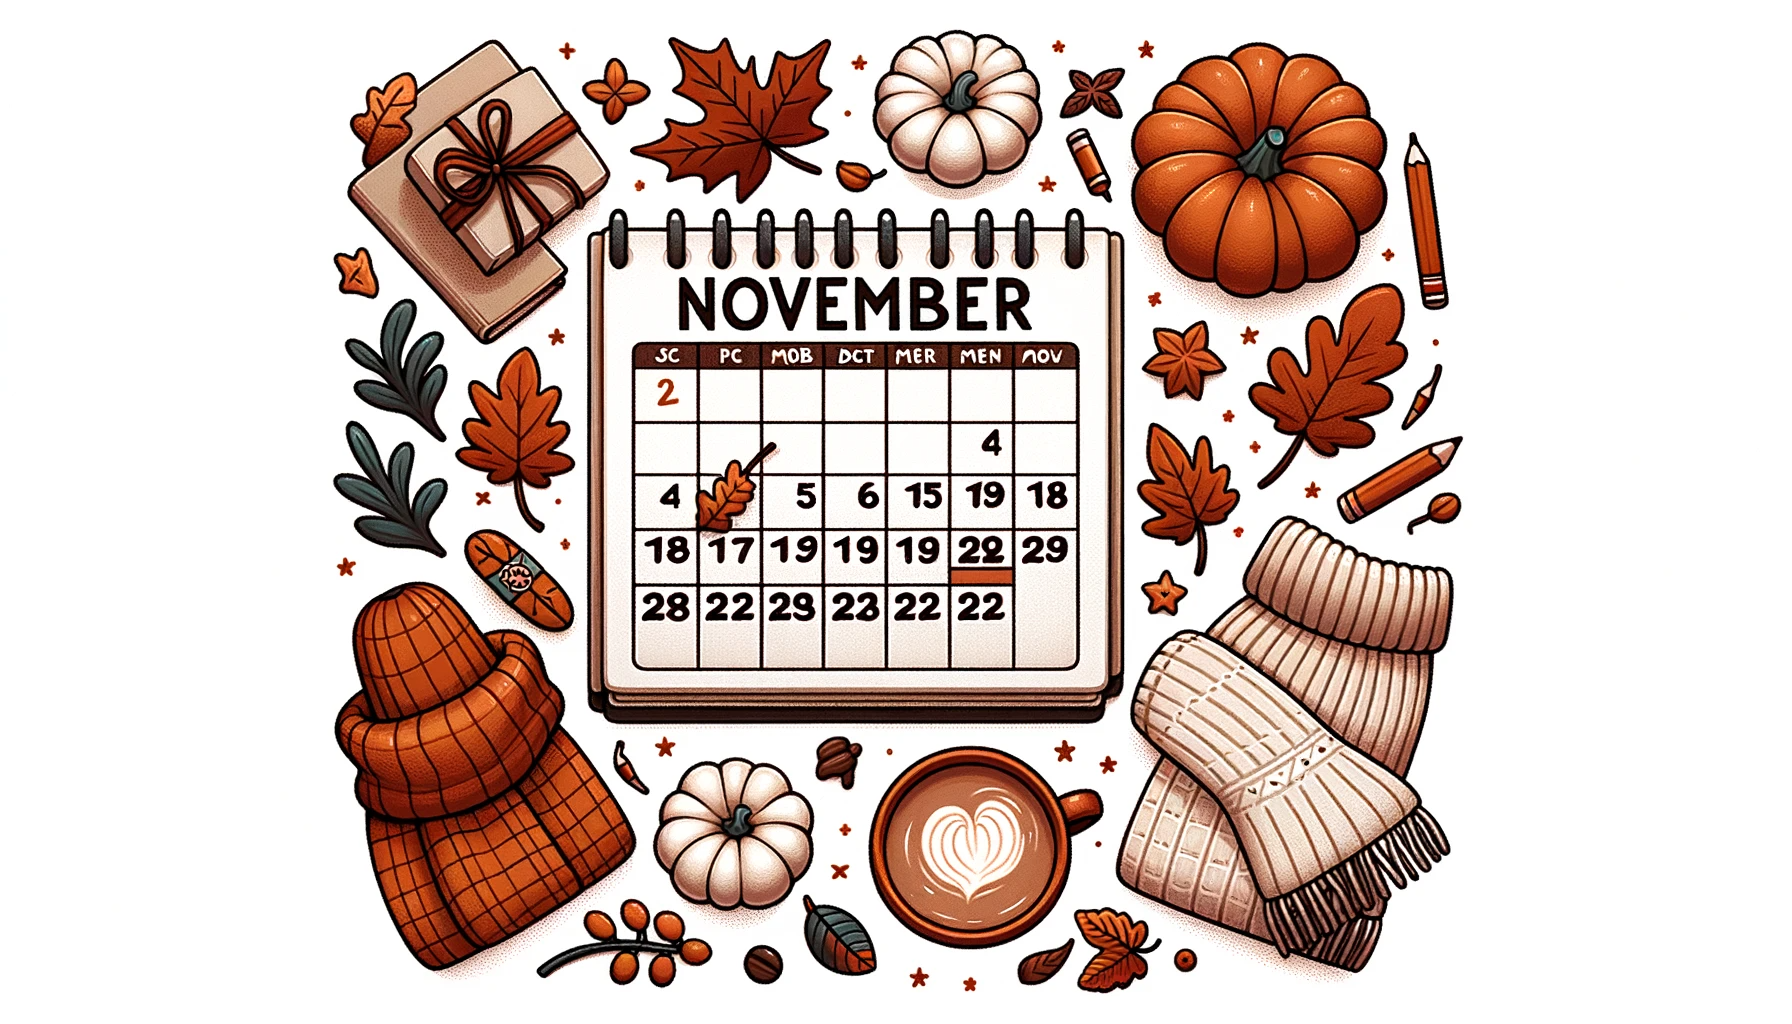 November Necessities Calendar and Comforts